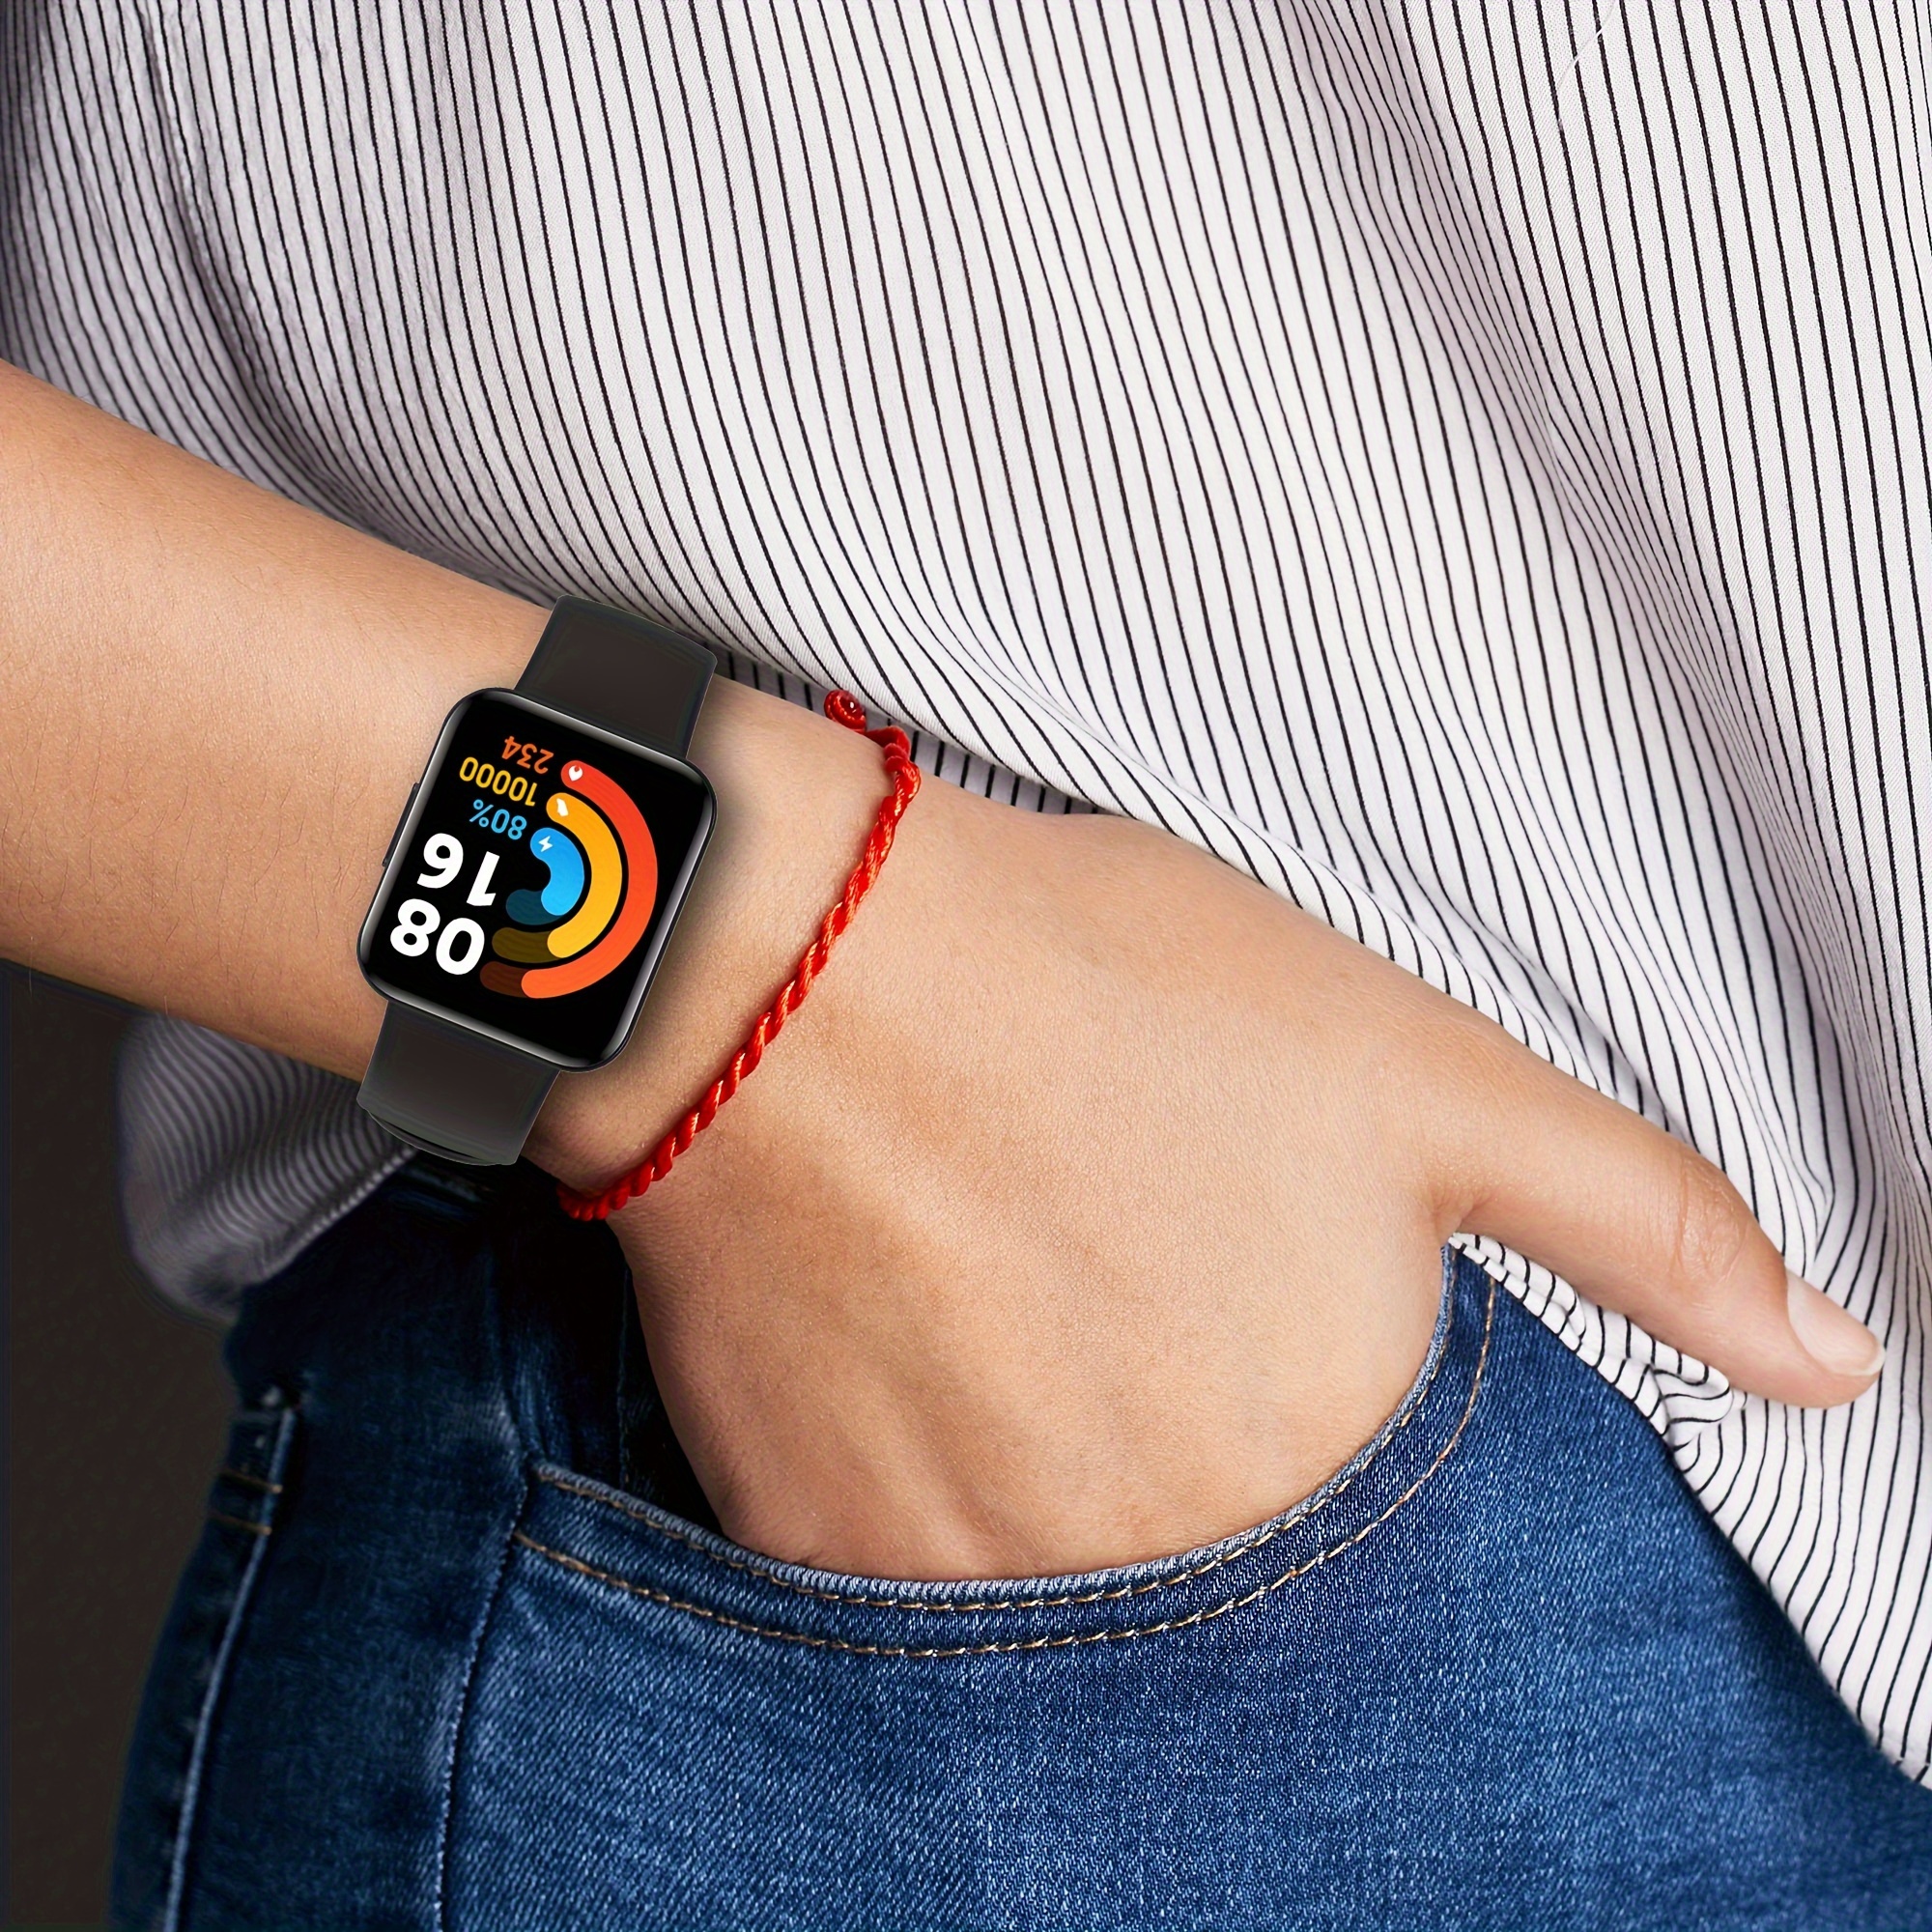 Replacement Wristband Watch Strap For Xiaomi Mi Watch 2 Lite/Redmi Watch 2  Lite